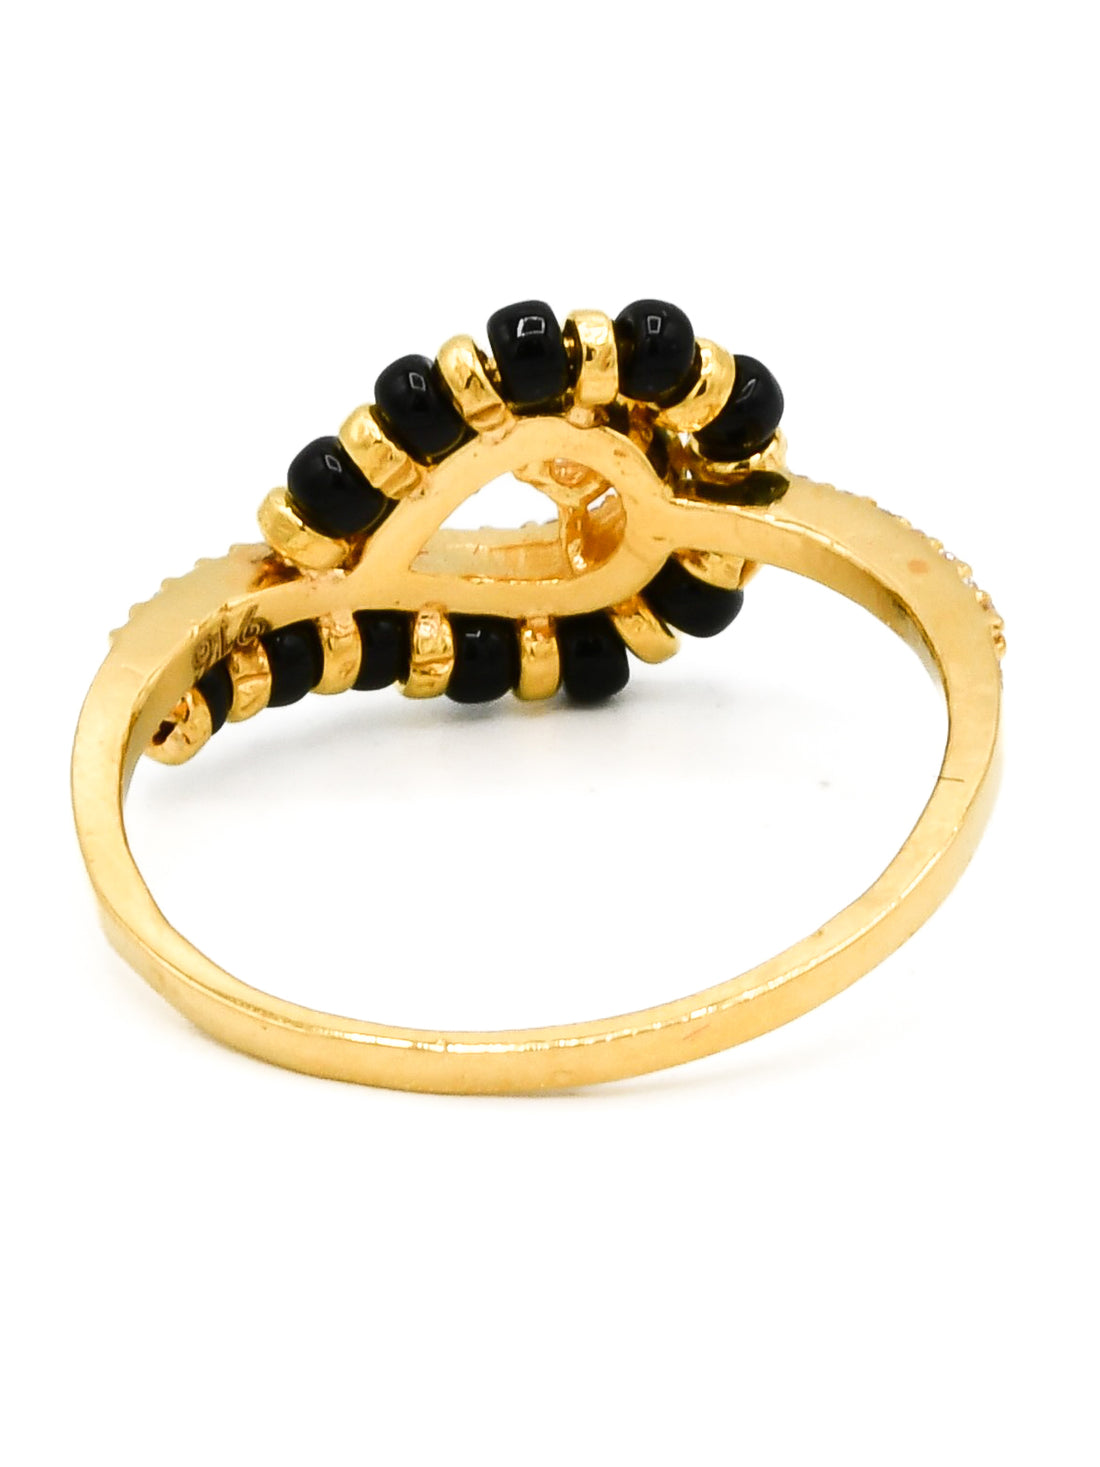 22ct Gold Black Beads CZ Ladies Ring - Roop Darshan